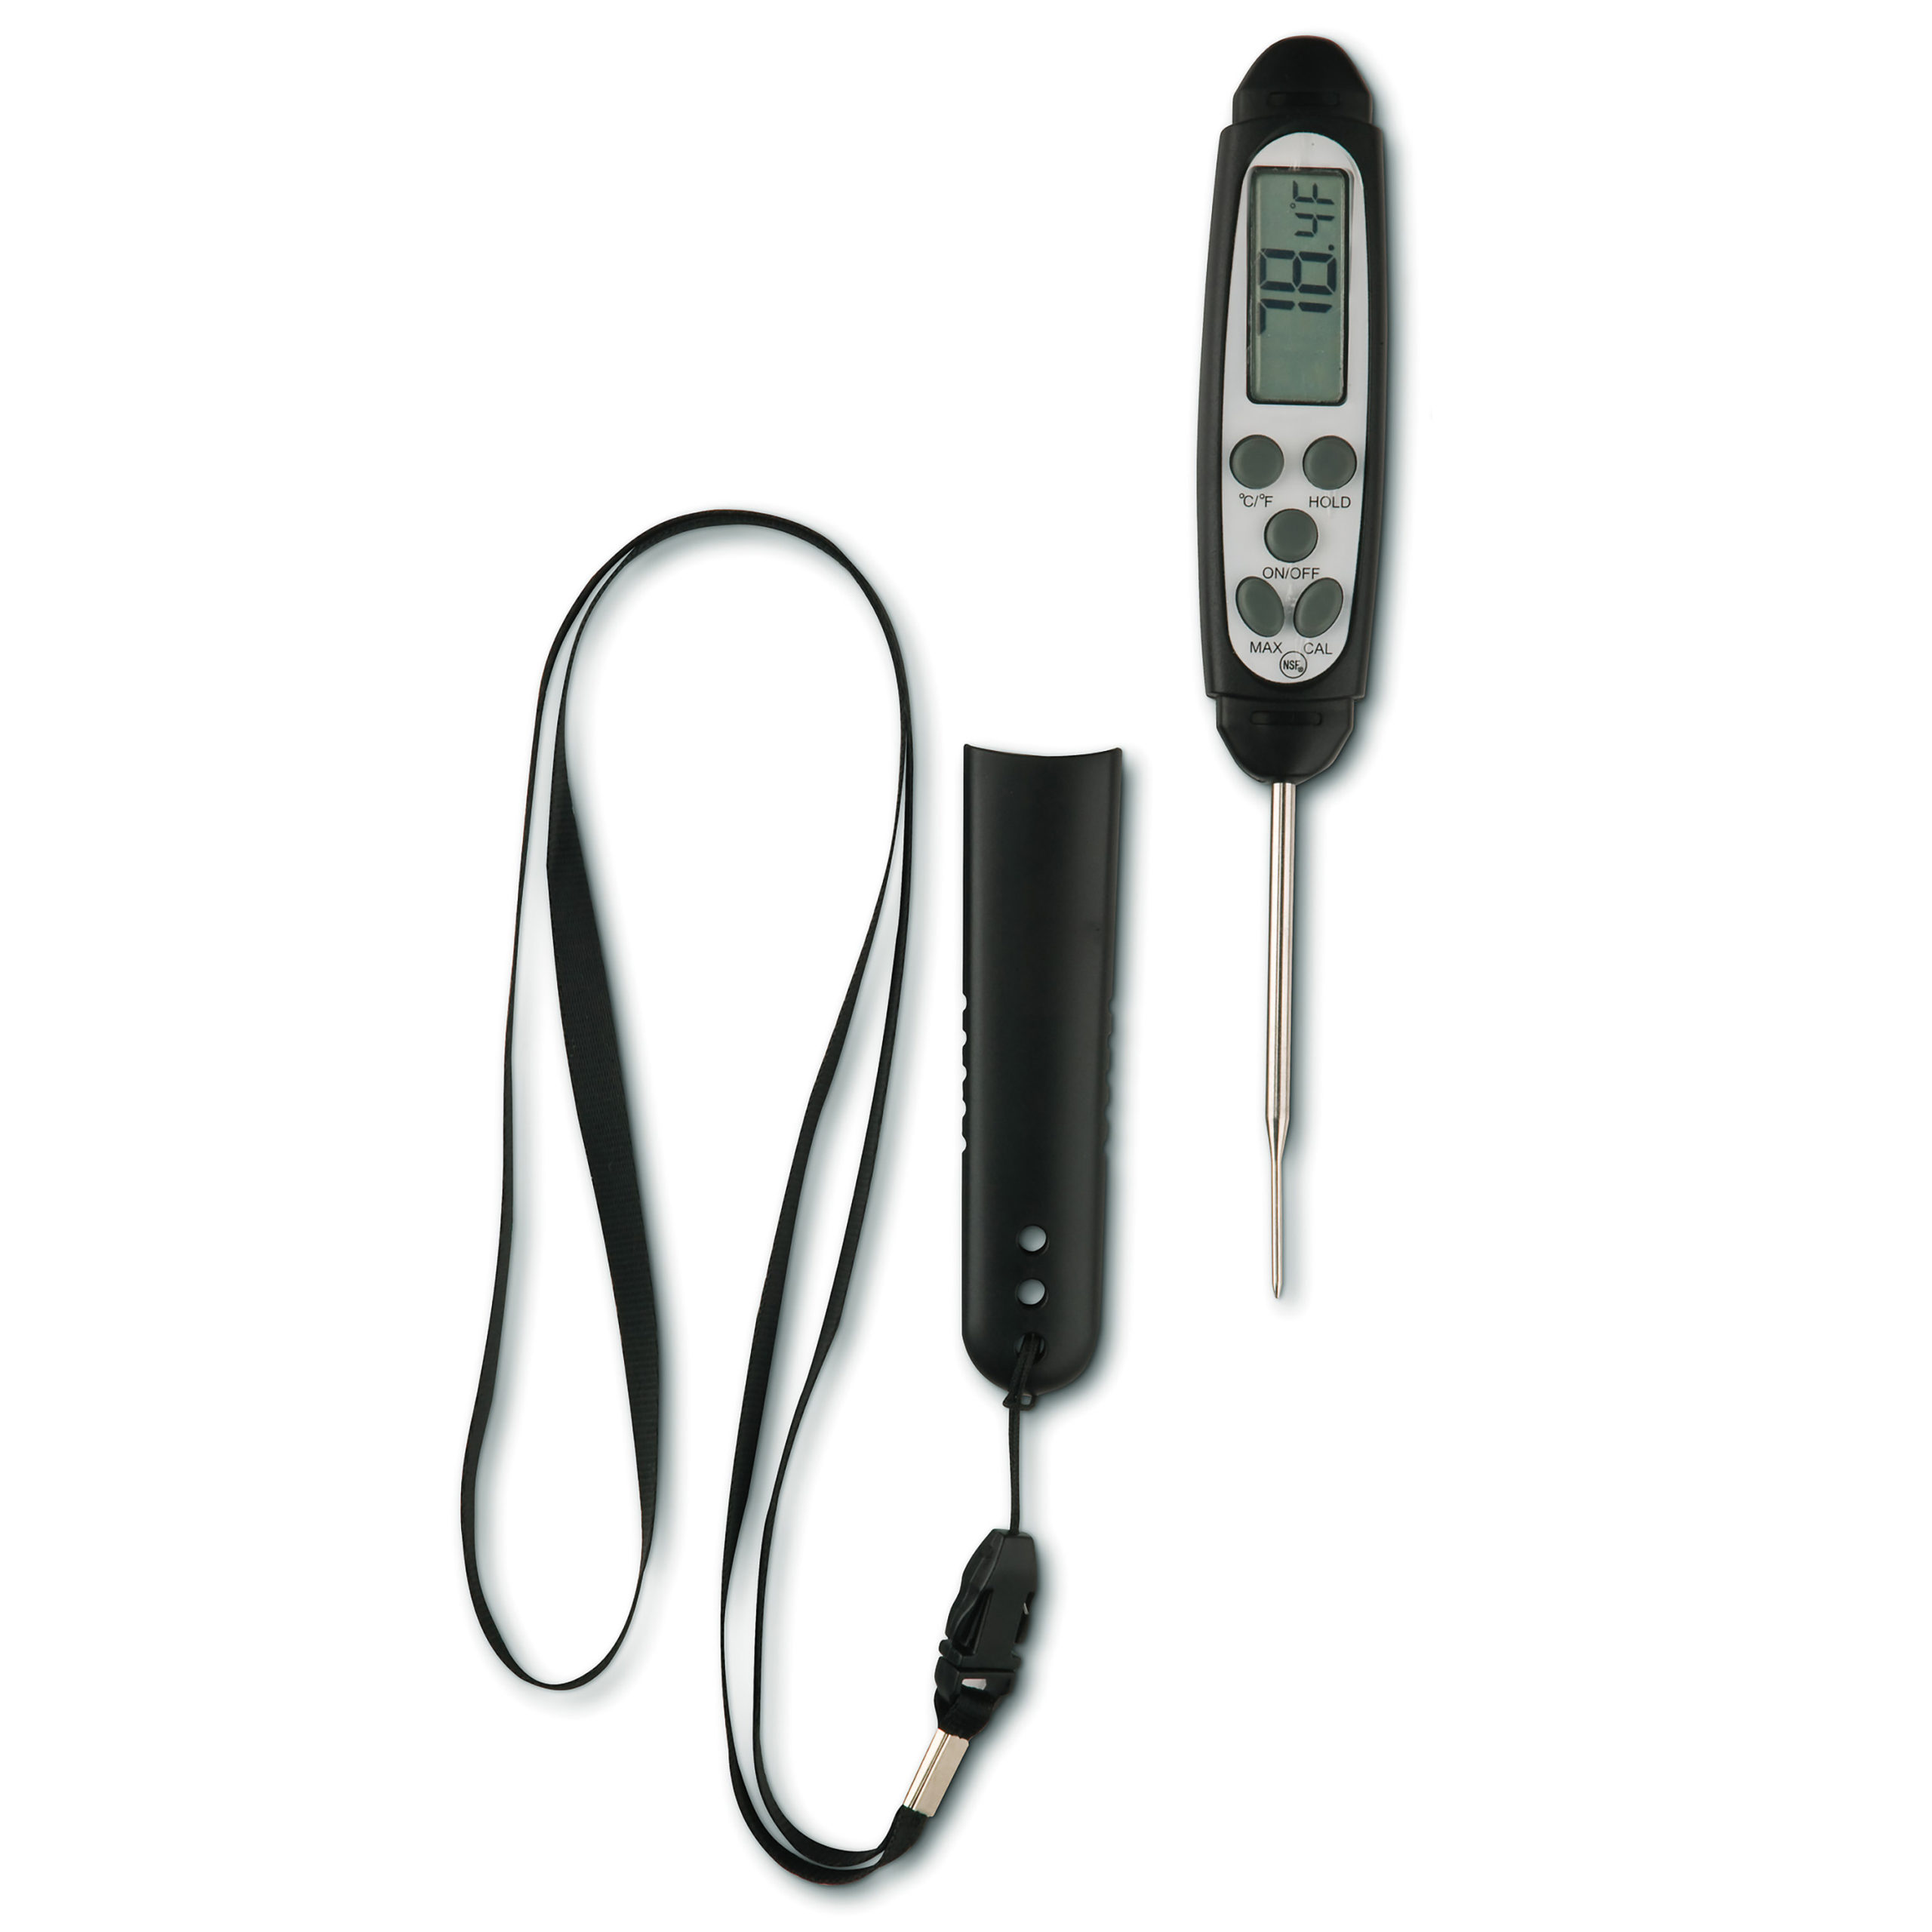 LW-09 Fast Read Digital Probe Thermometer